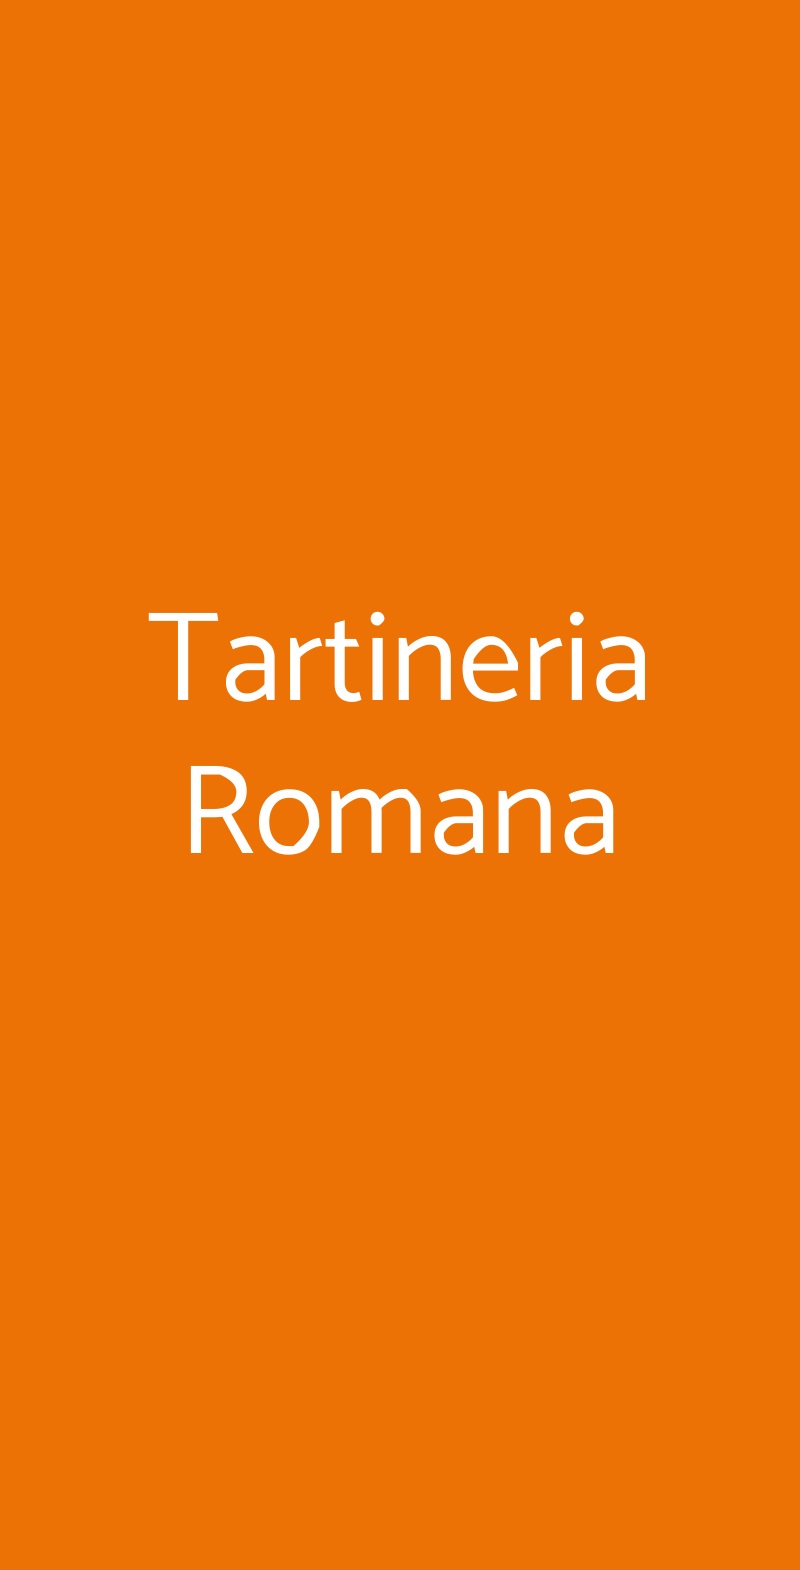 Tartineria Romana Roma menù 1 pagina